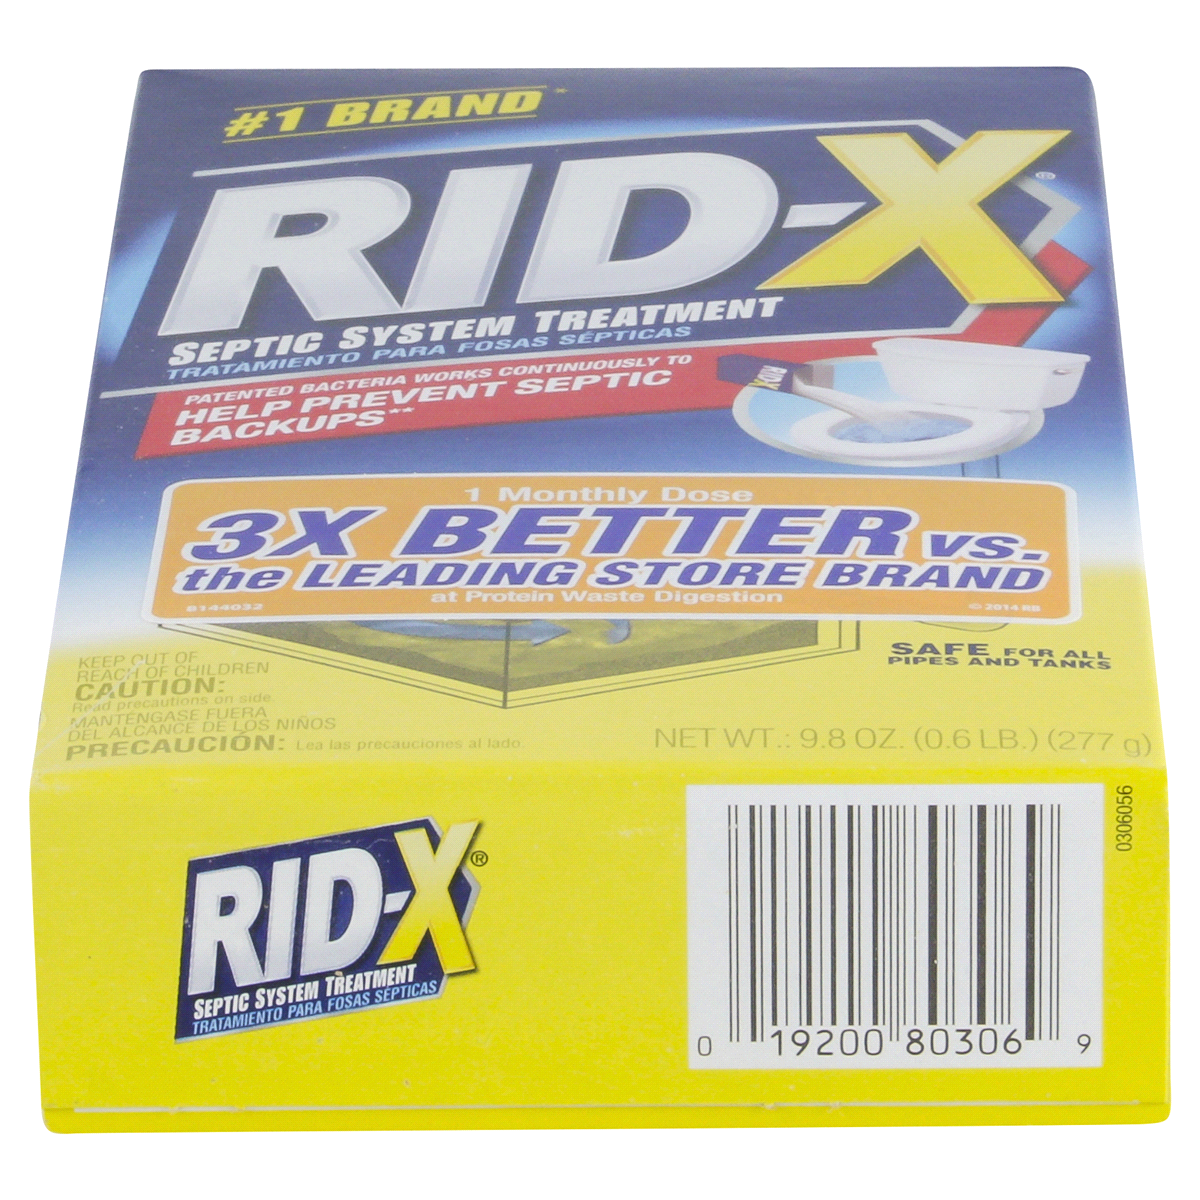 RID-X 9.8 oz. Powder Septic Tank Treatment 19200-80306 - The Home